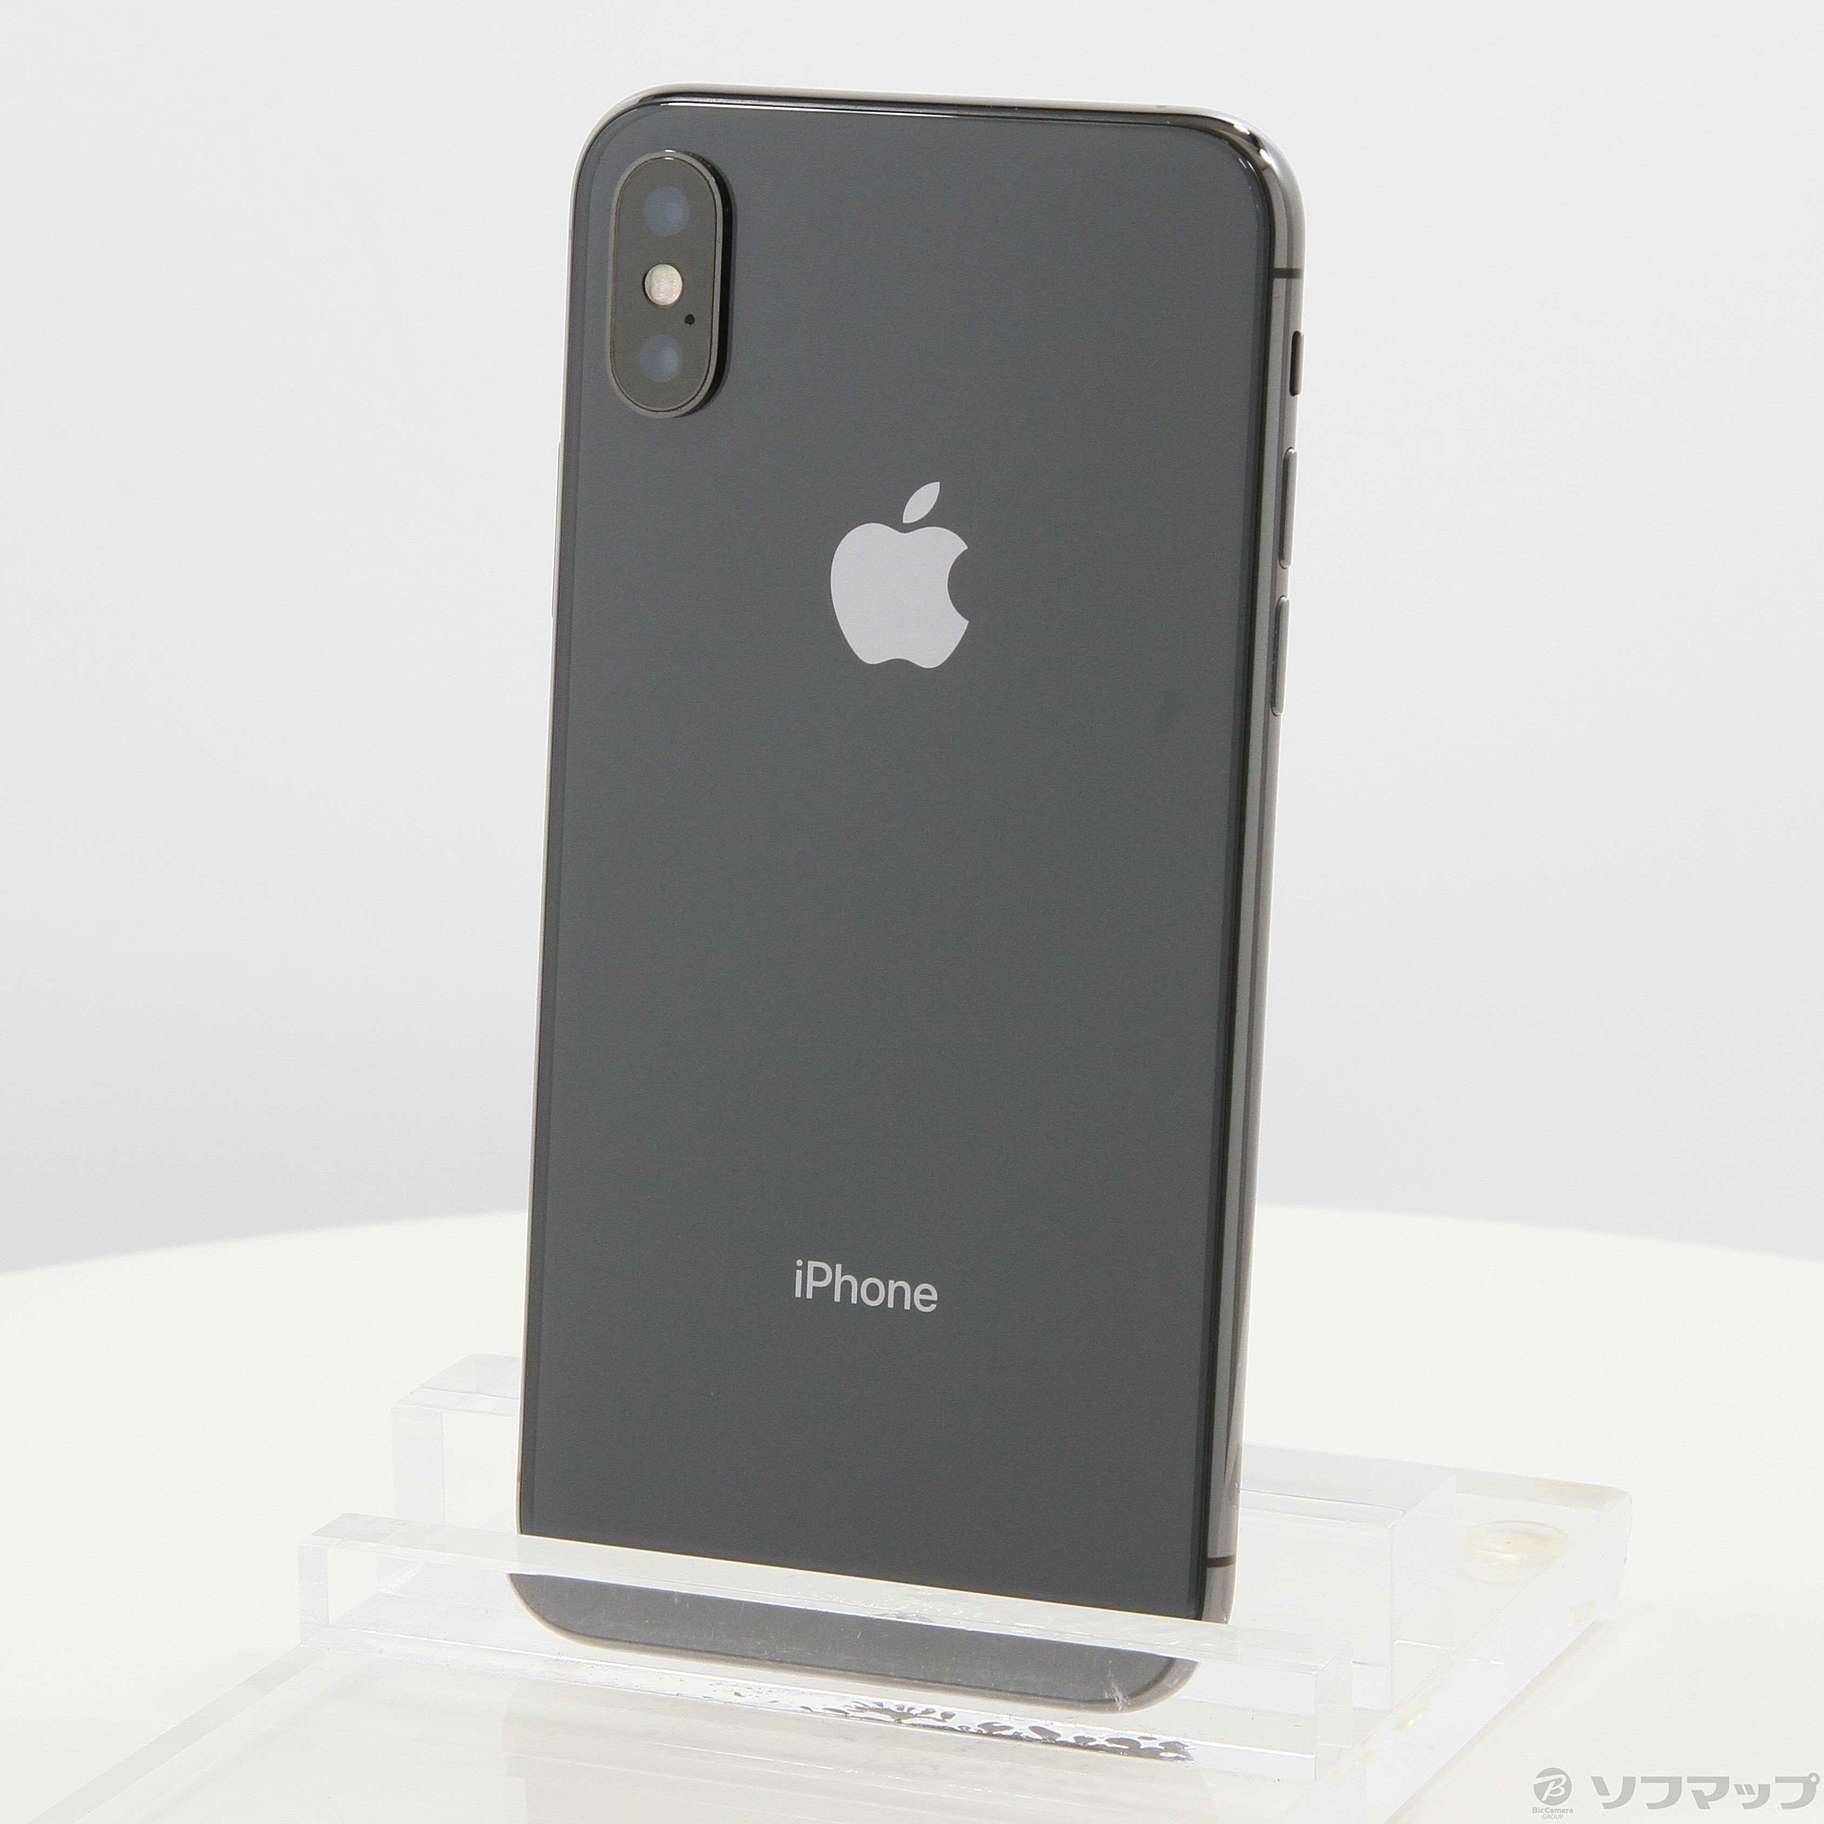 iPhoneX 64GB SIMフリー スペースグレイ 美品 バッテリー95%